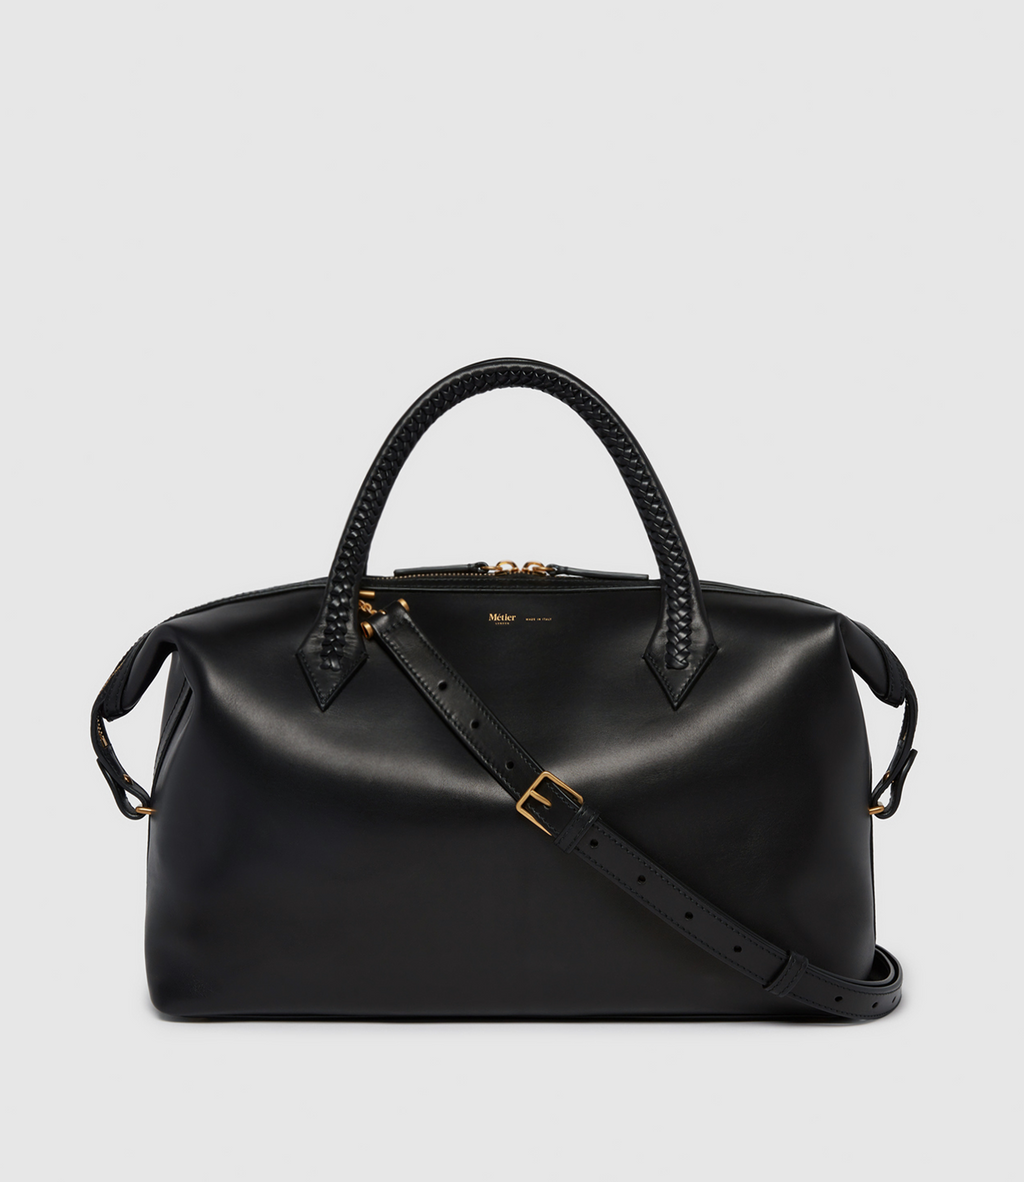 Métier Women's Handbag Black Leather